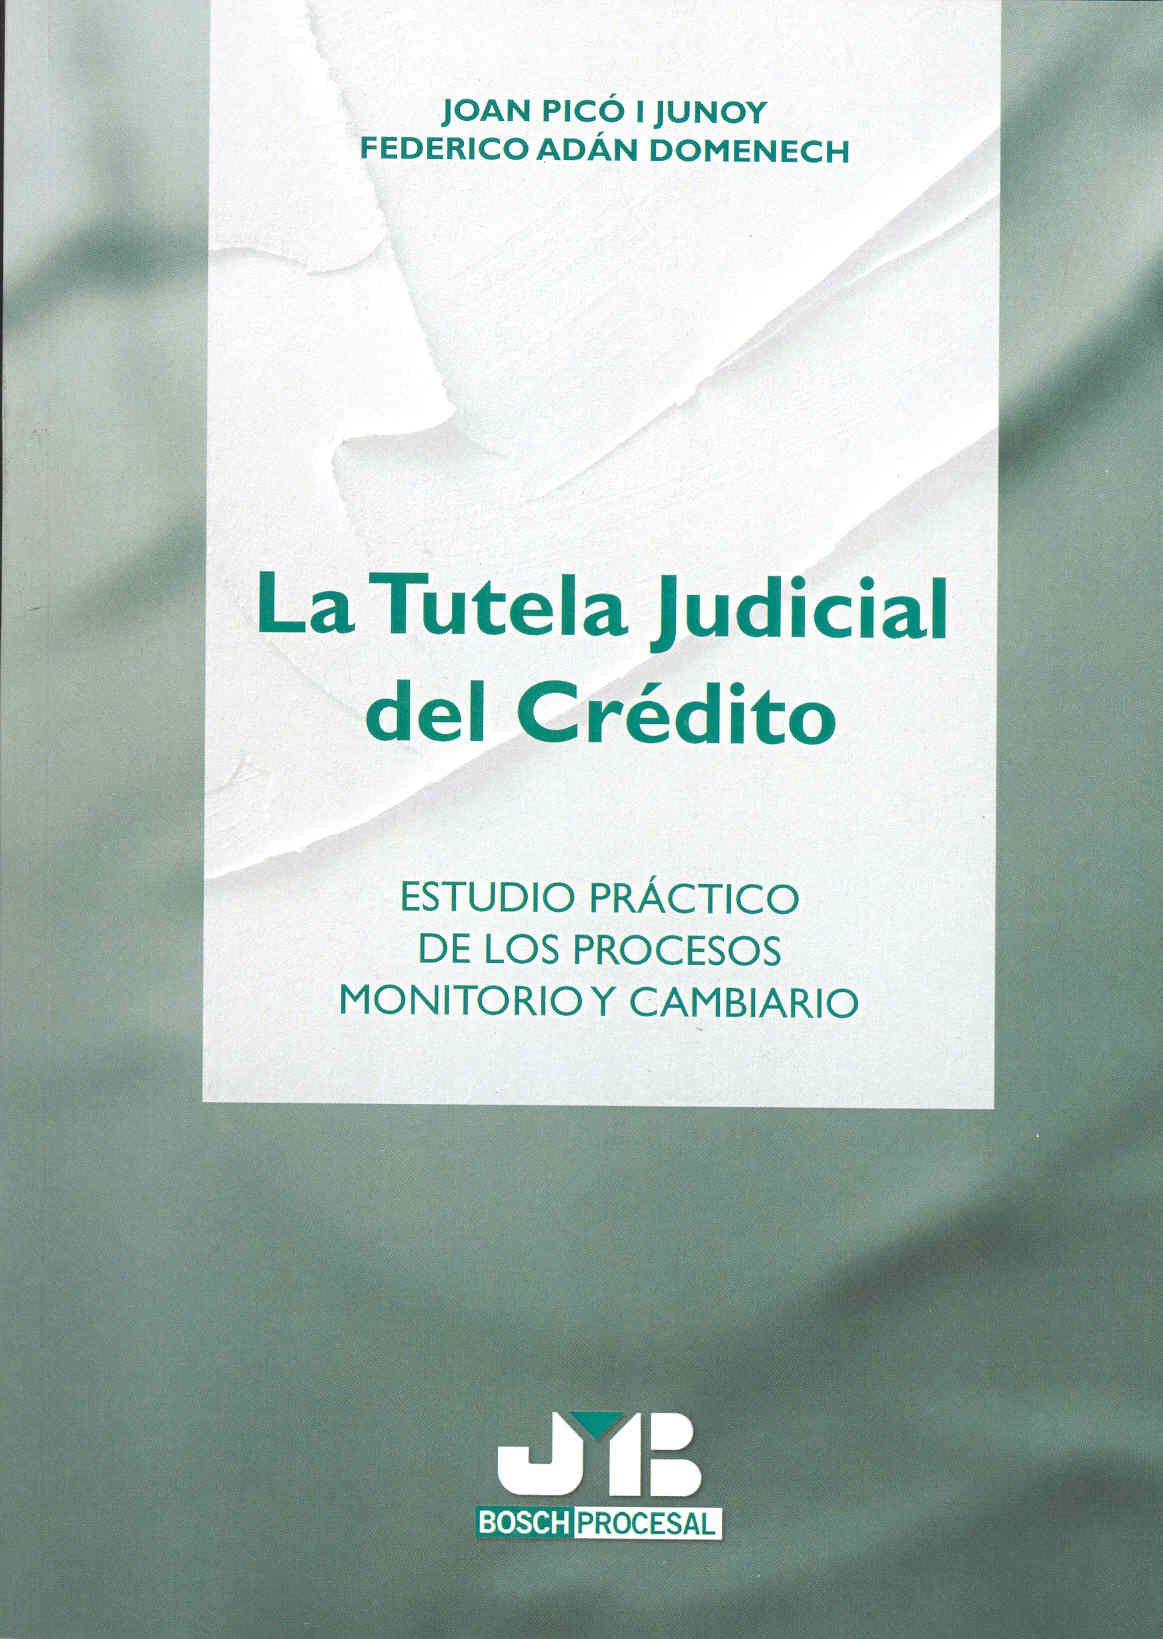 La tutela judicial del crédito